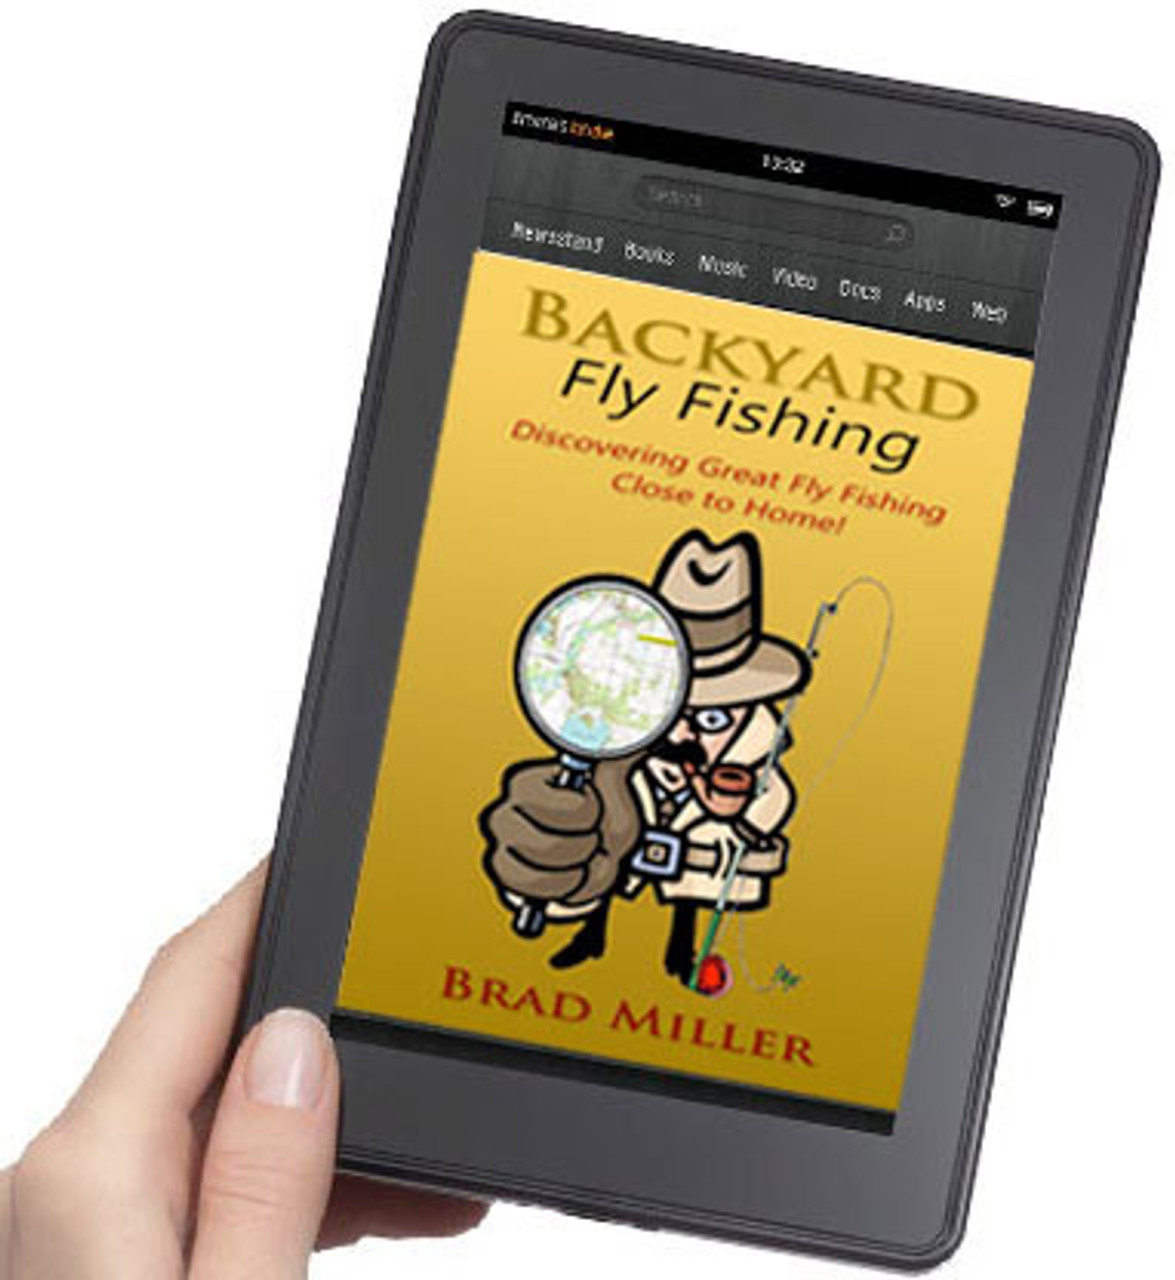 Backyard Fishing - Brad Miller - E-Reader Version